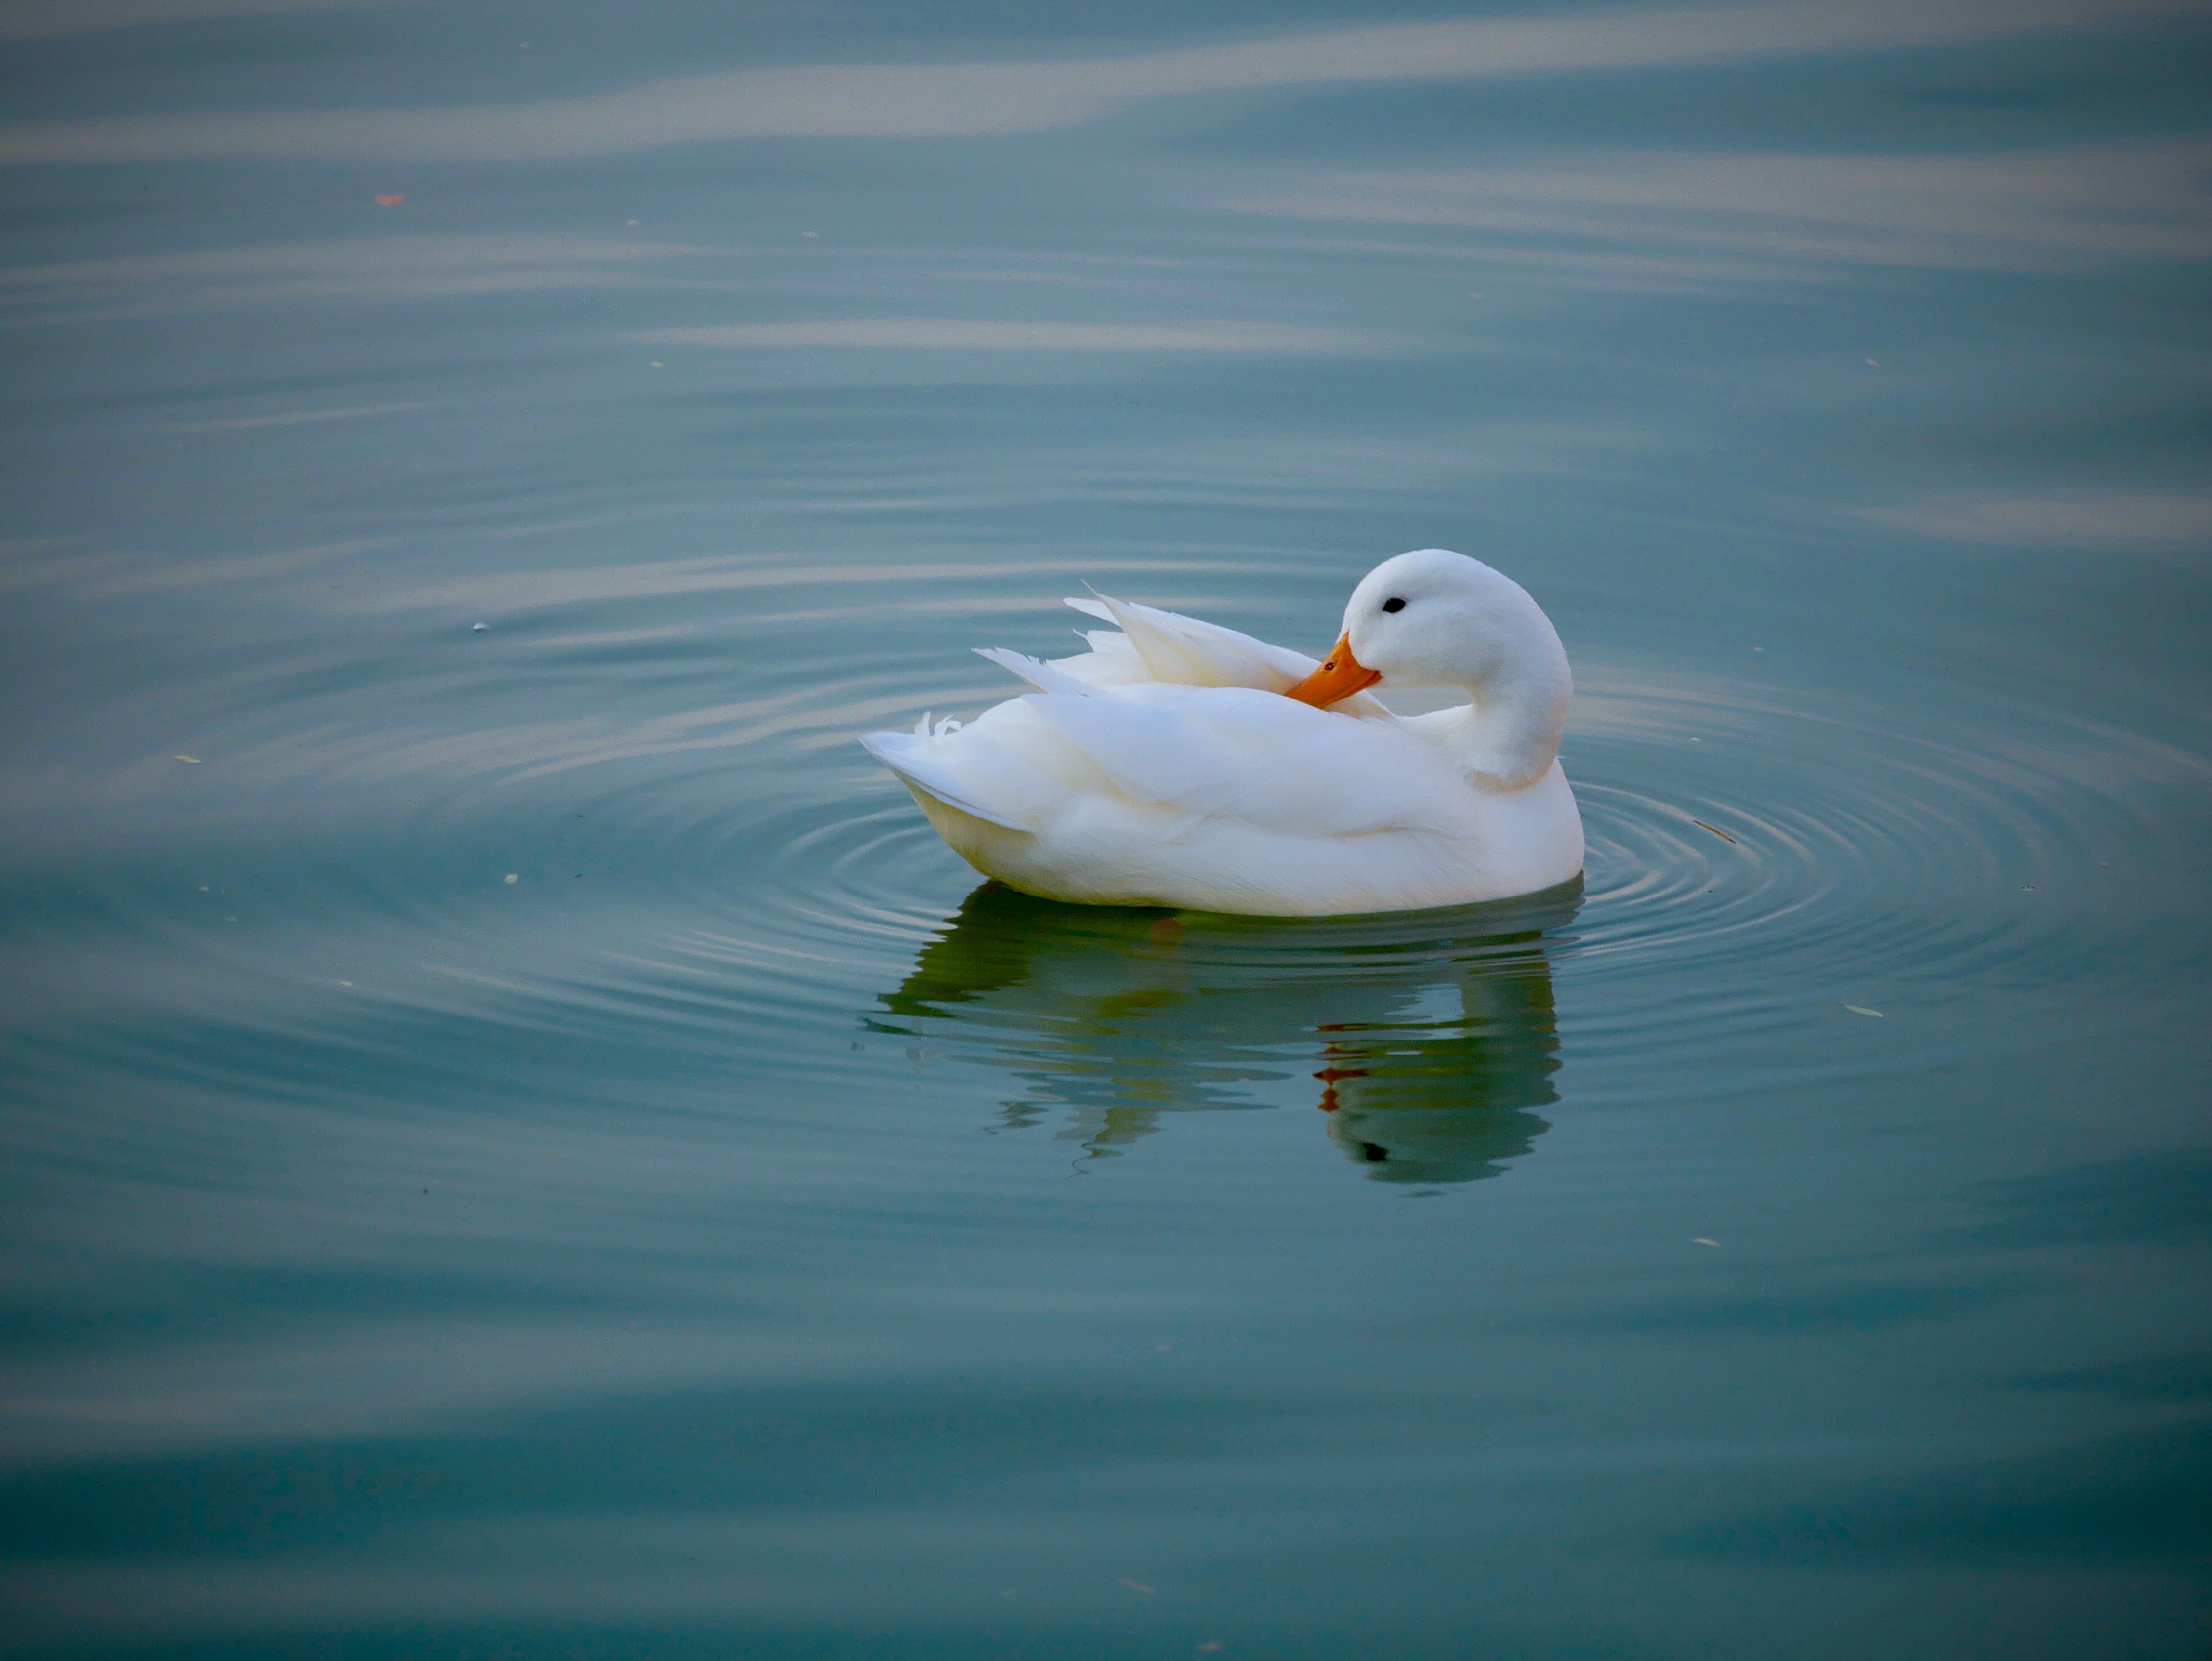 A duck in water in Charlotte, North Carolina